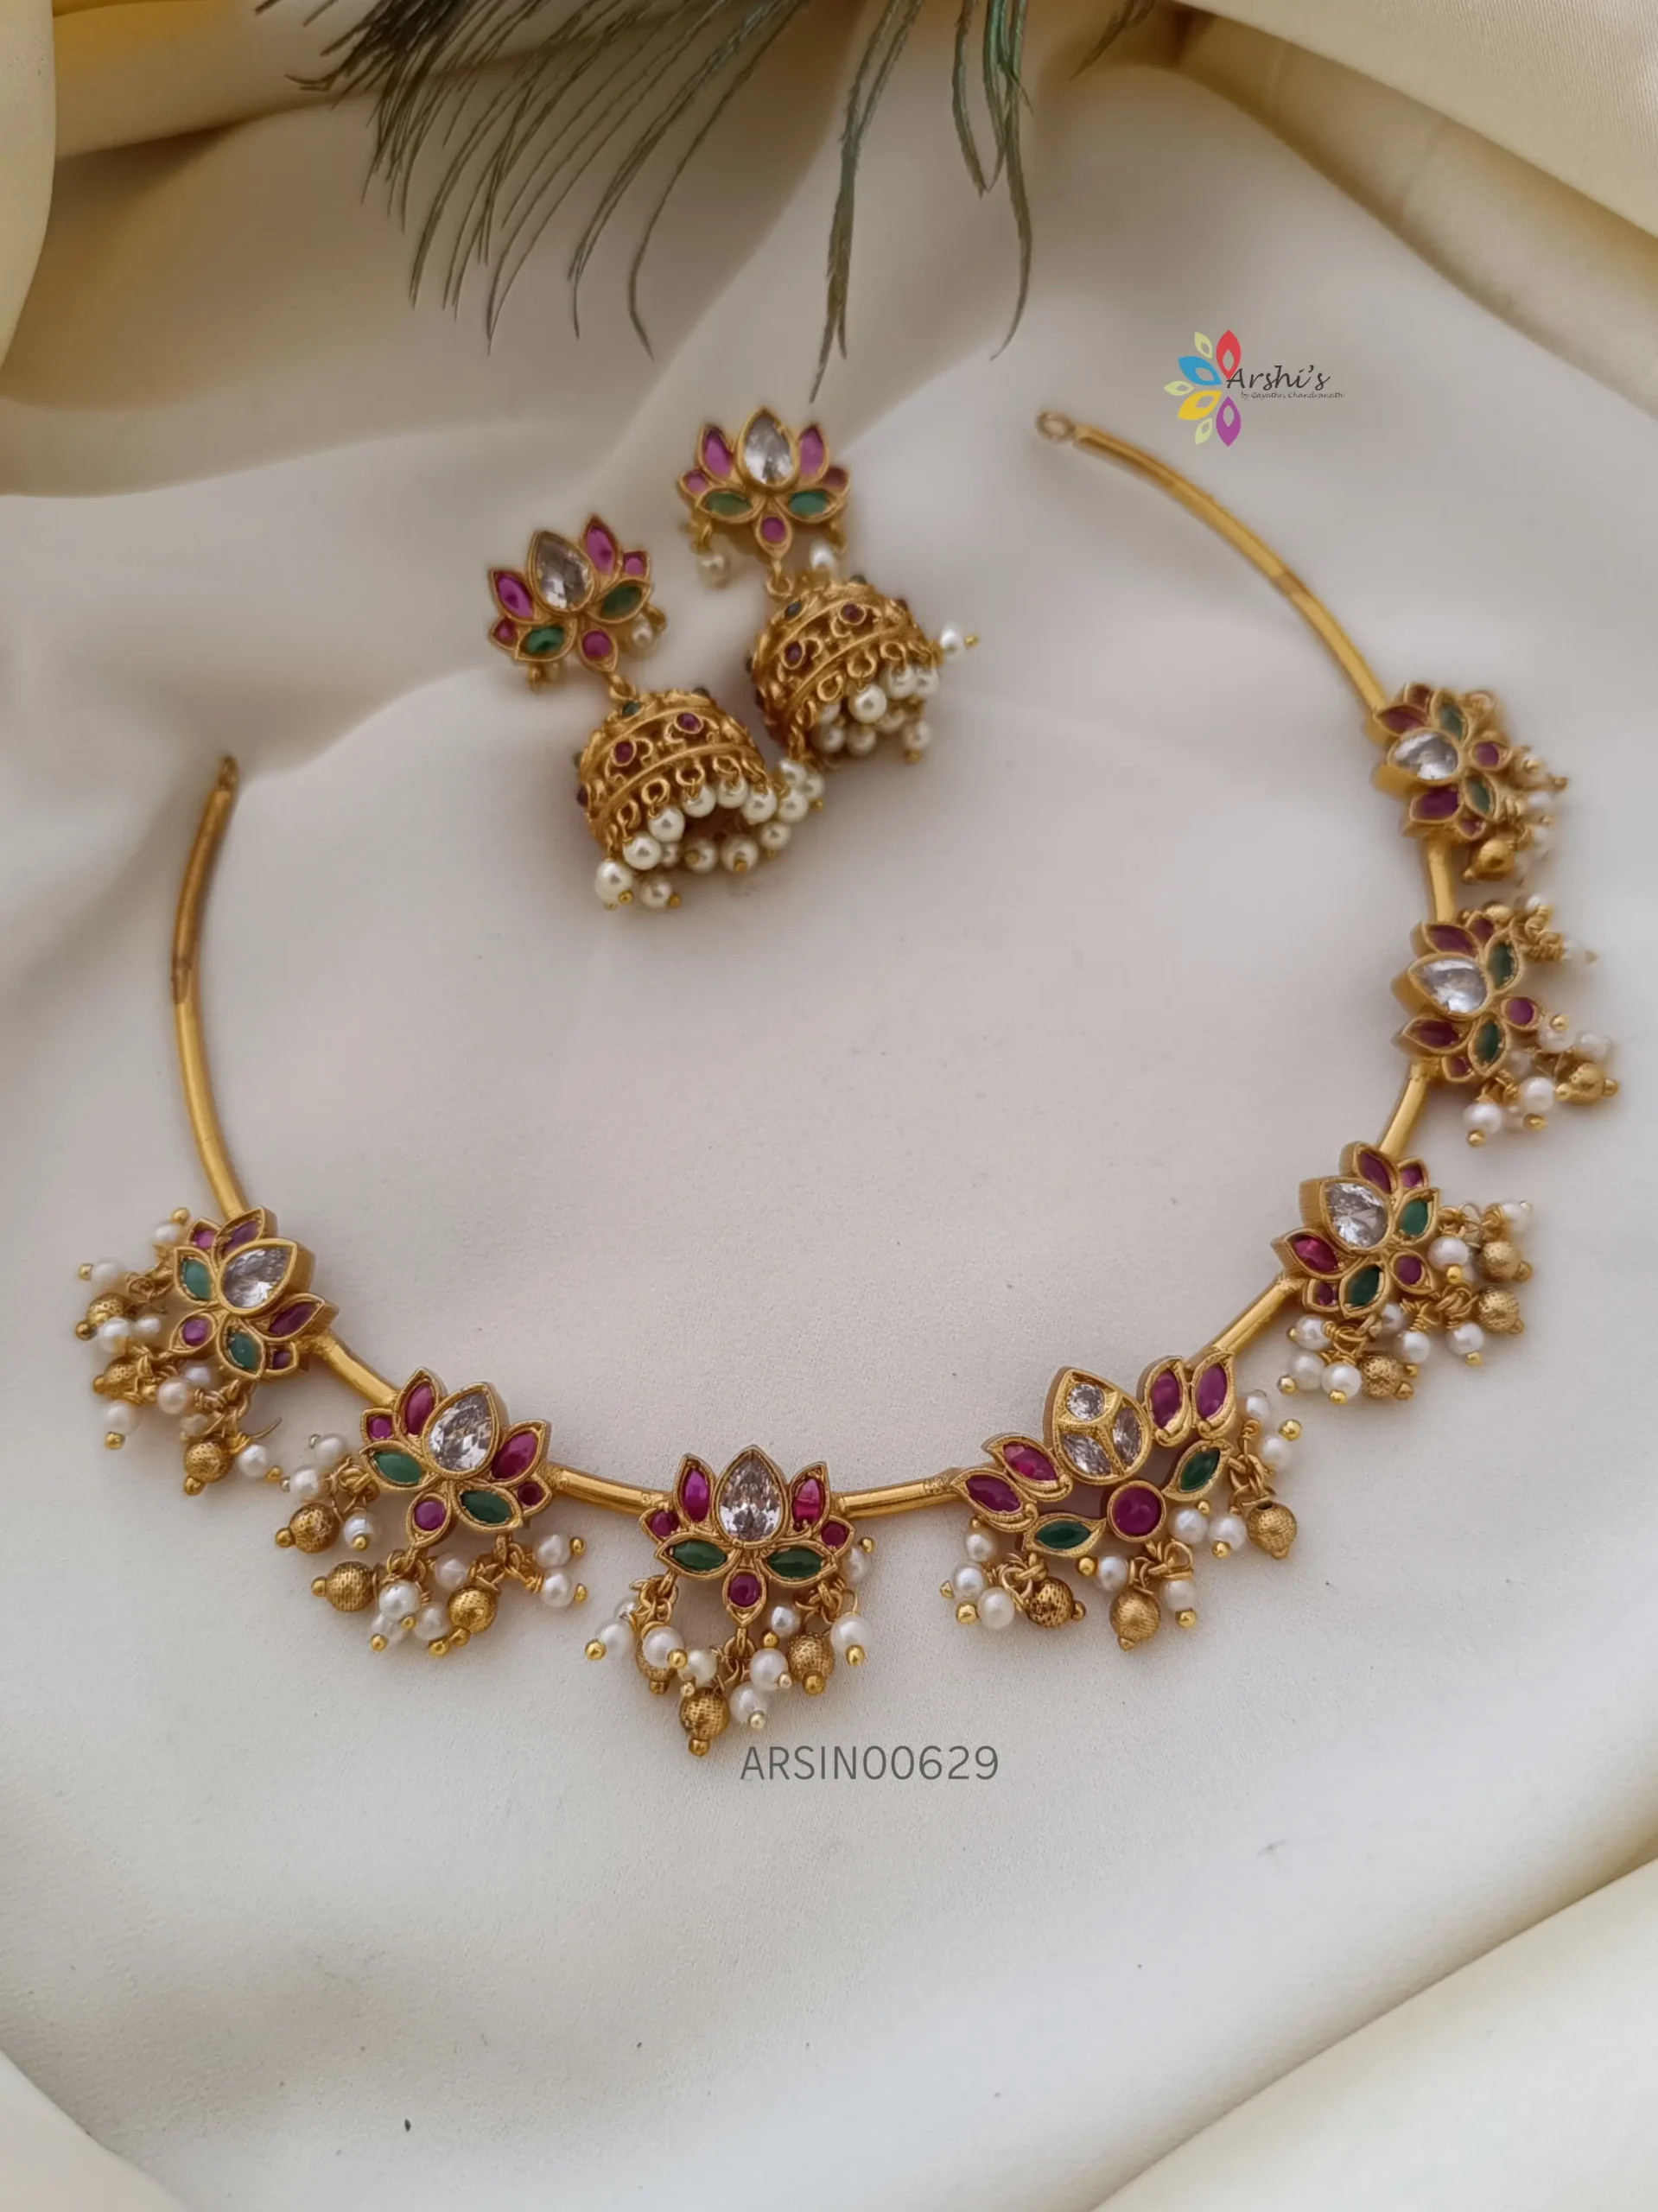 Seven Lotus Design Necklace